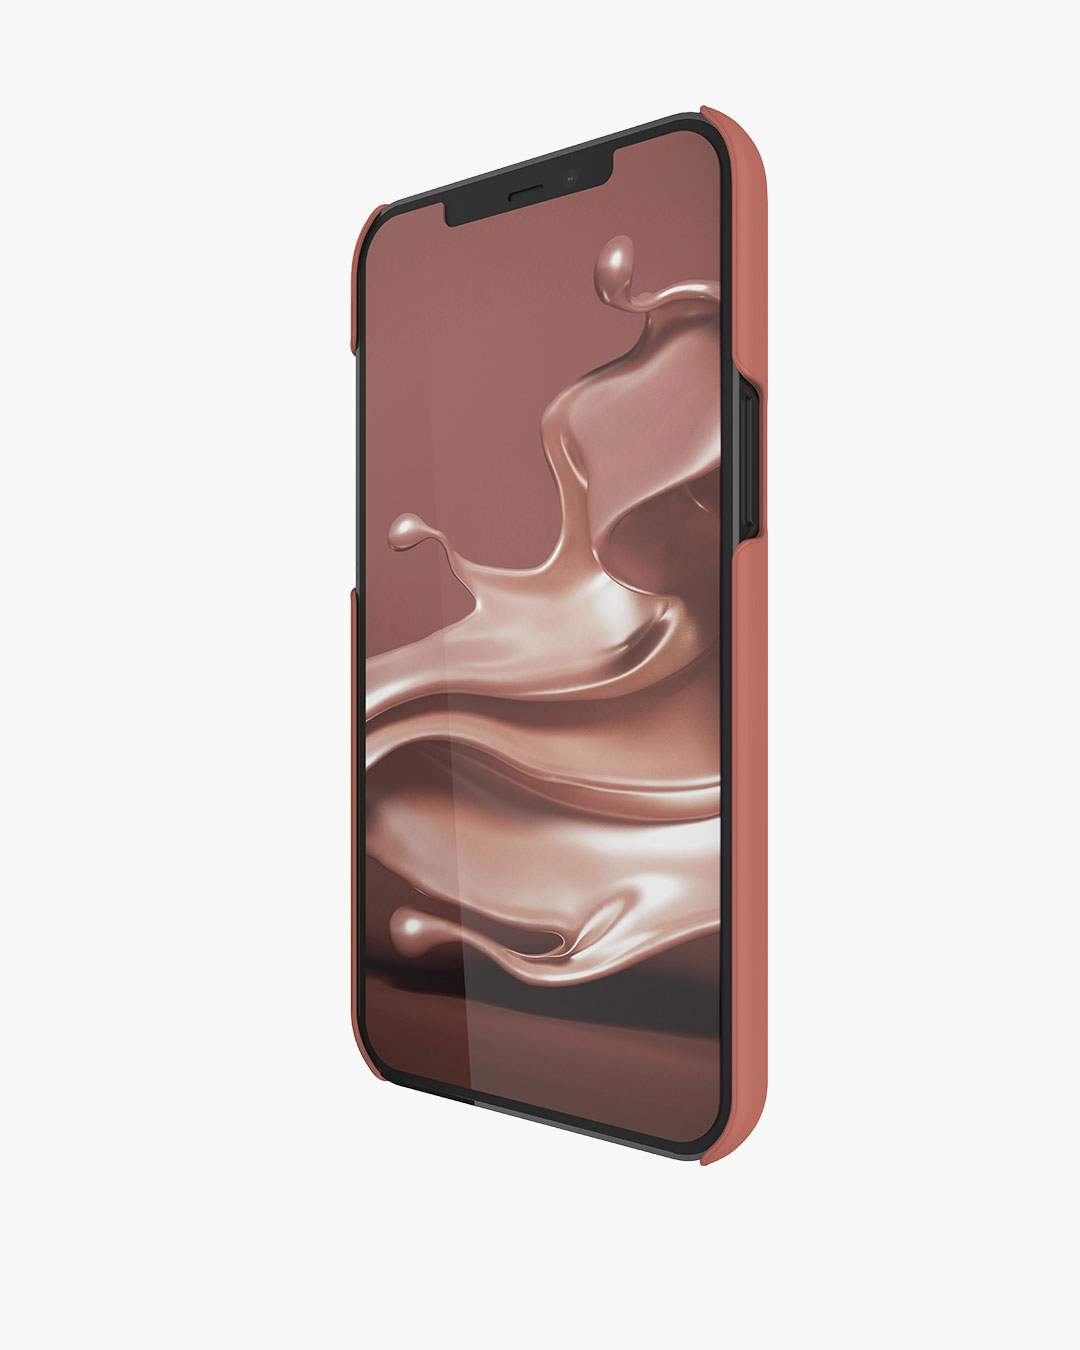 Fresh 'n Rebel - Phone Case iPhone 12 Pro Max - Safari Red